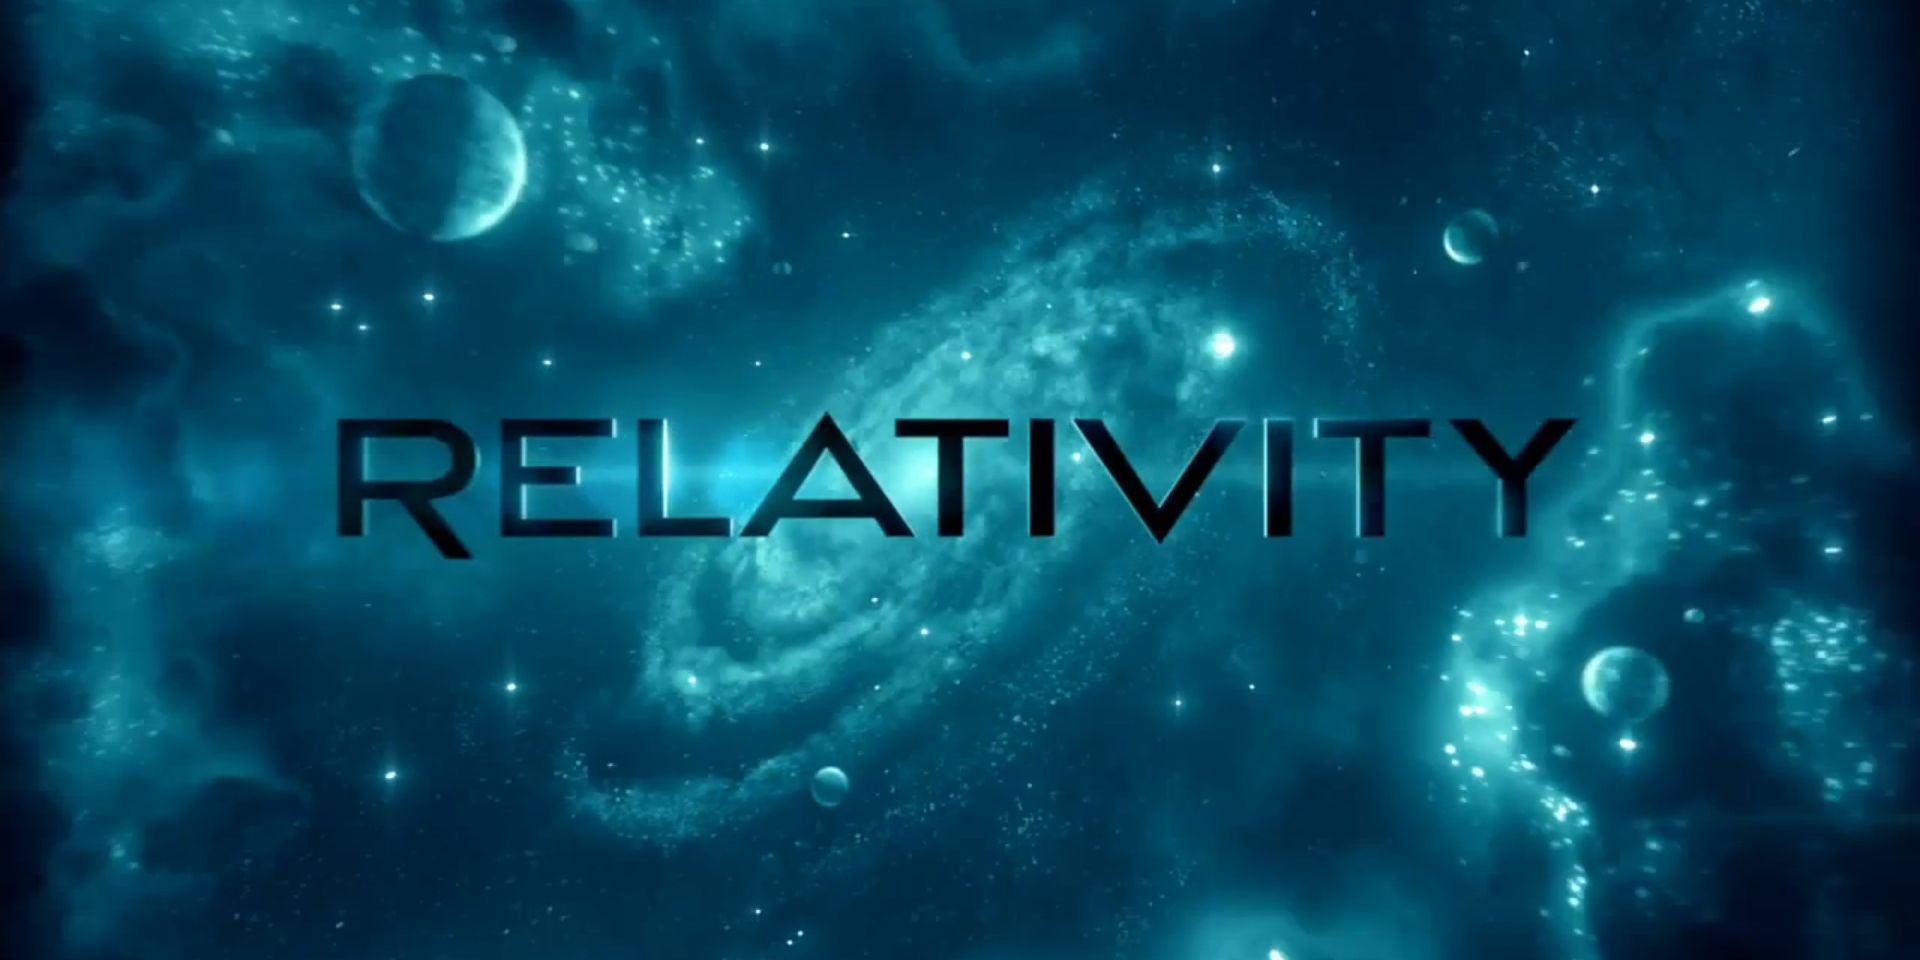 relativity movie production company video intros